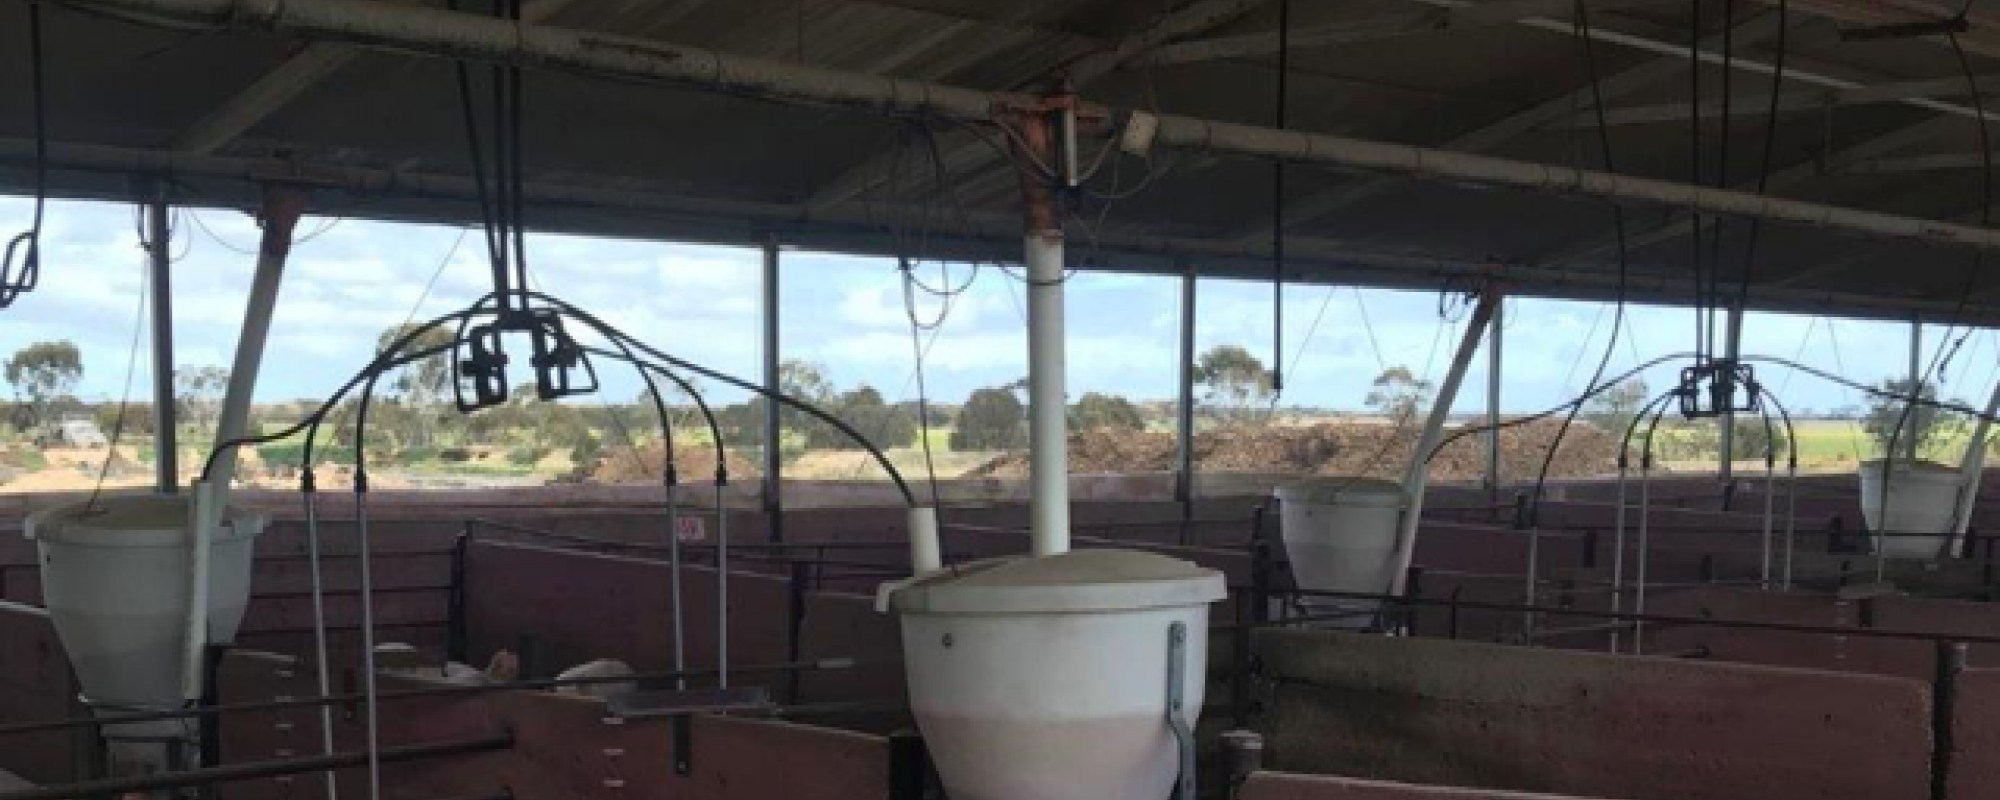 Farms in Australia are now using Fancom's eYeGrow